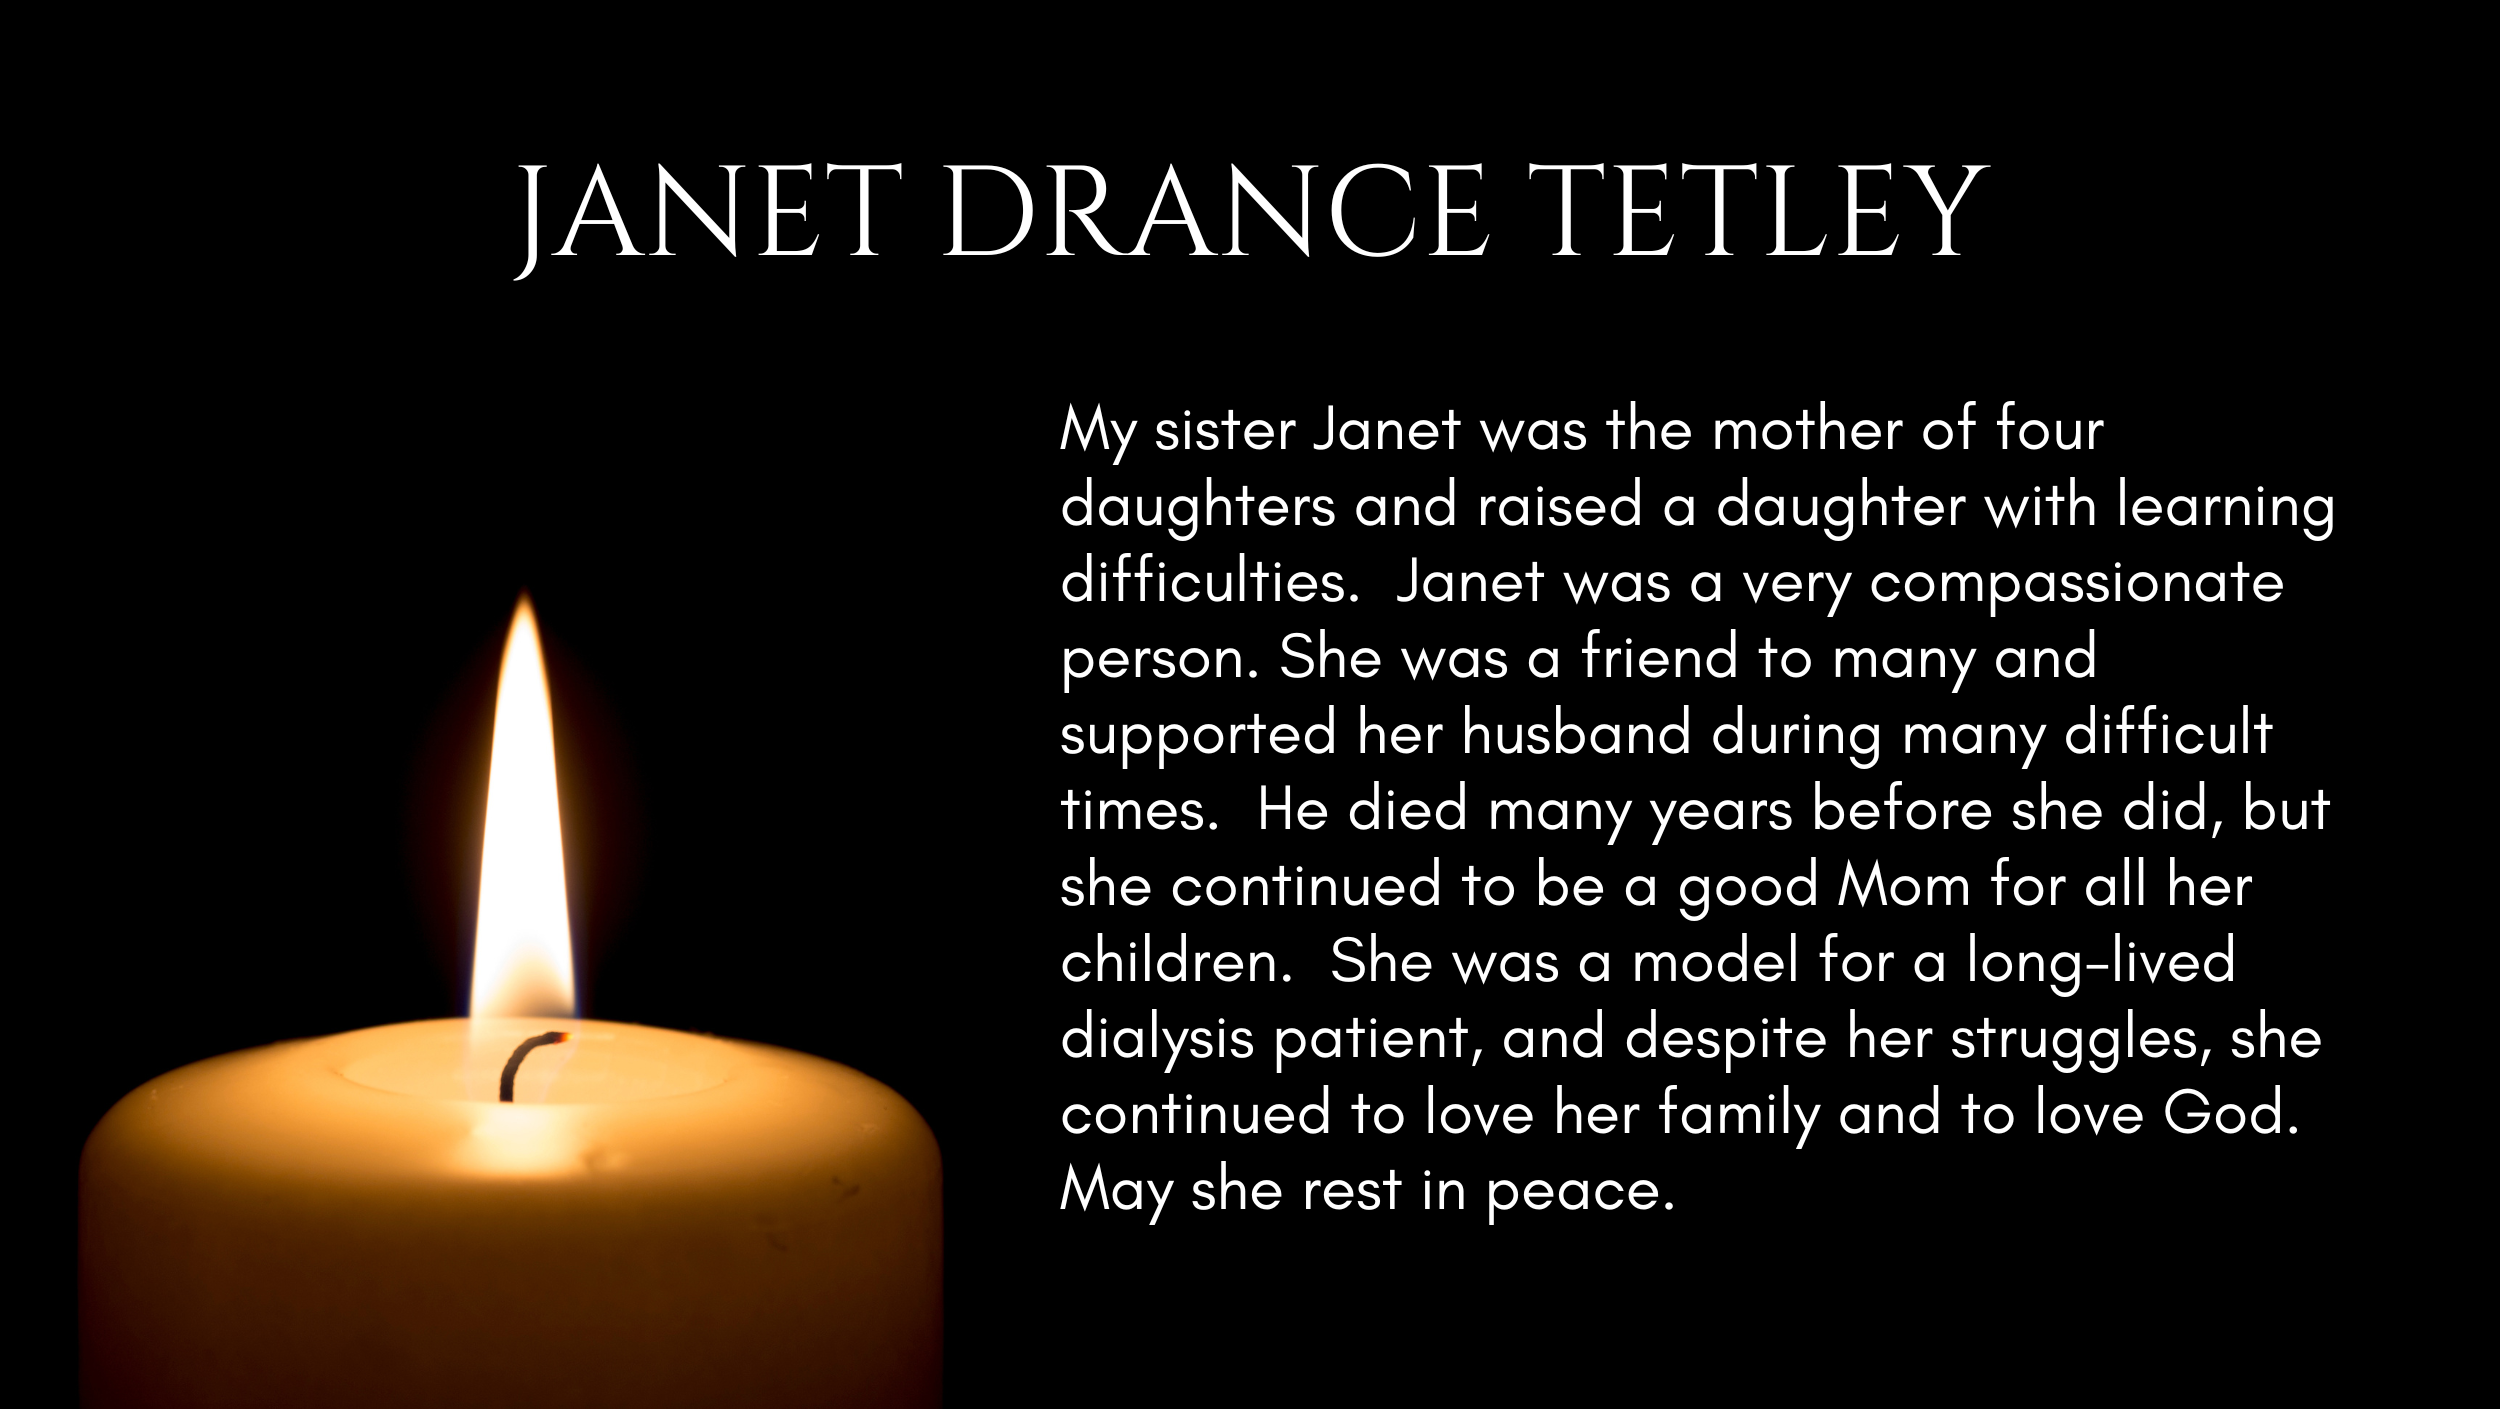 Tetley Janet Drance.png